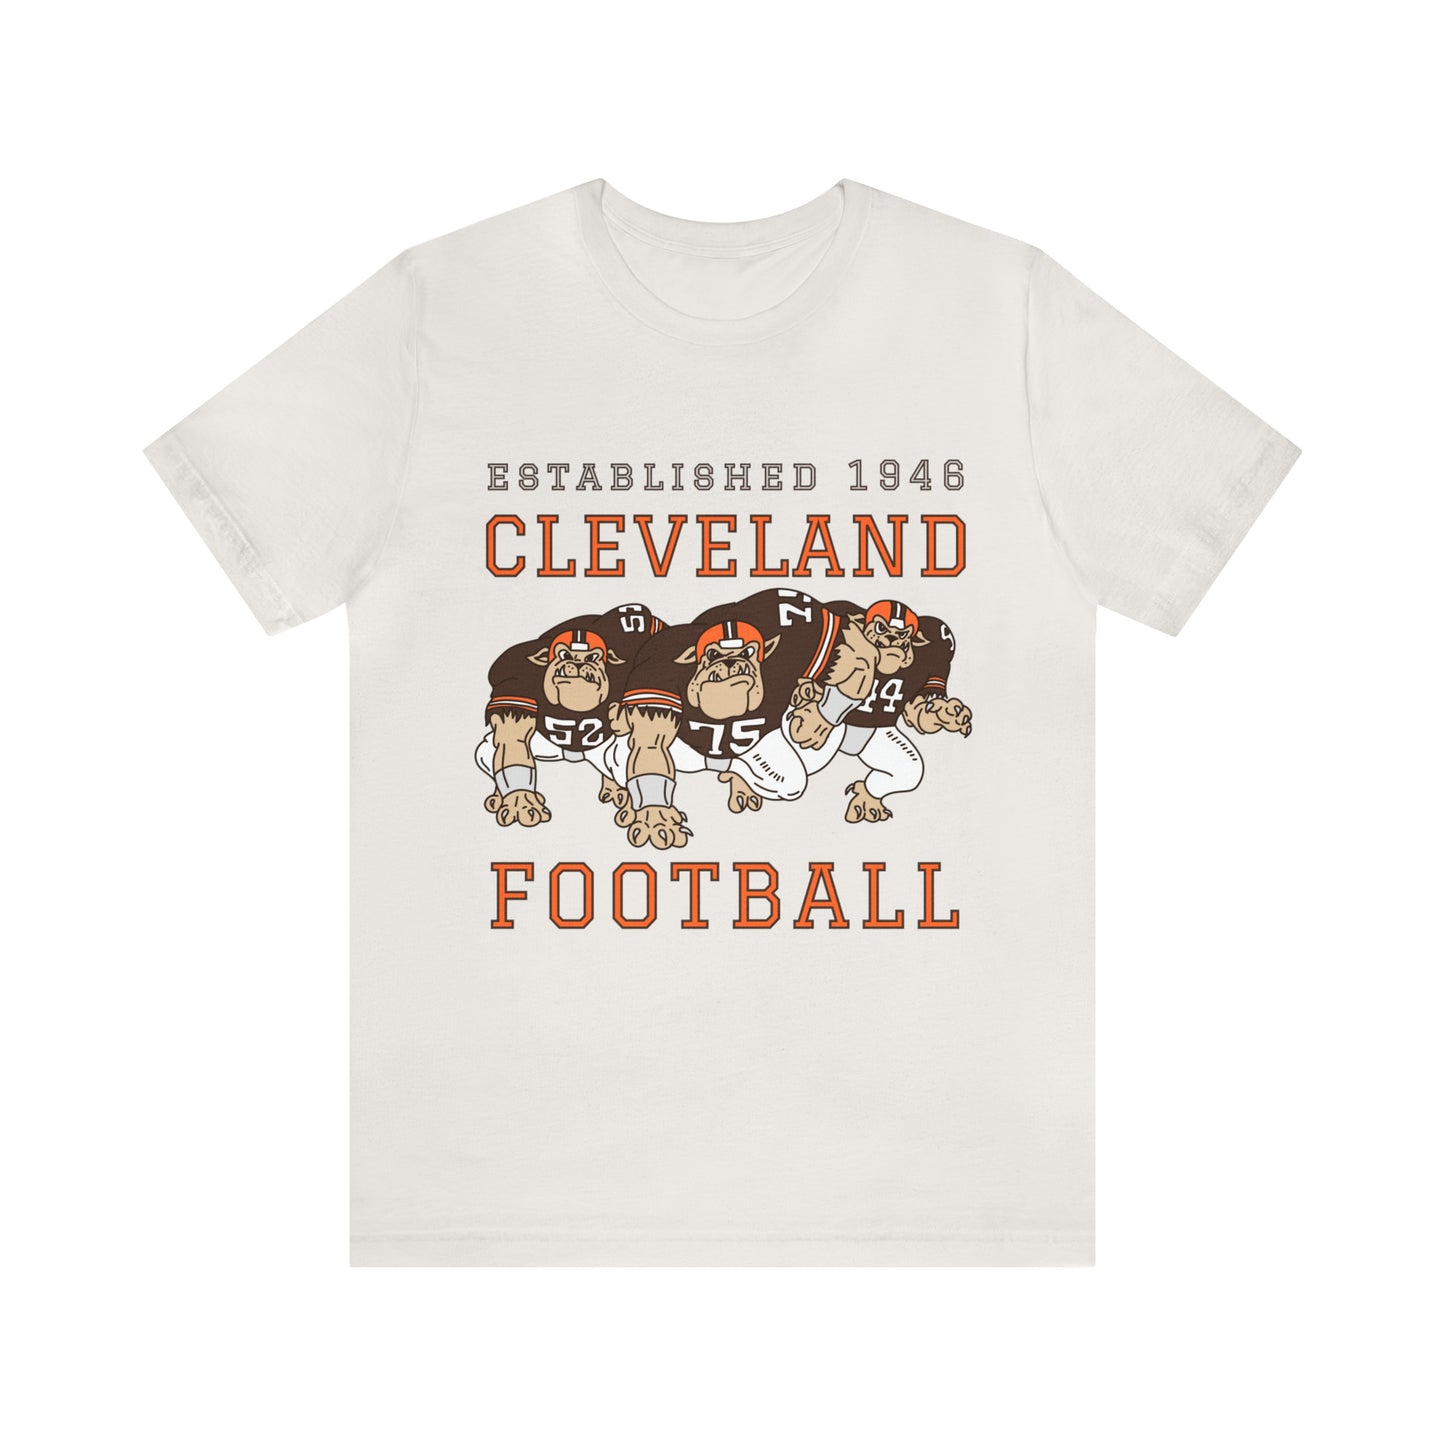 Dawg Pound Cleveland Browns T-Shirt - Vintage Cleveland Browns NFL Football Short Sleeve Tee - Retro Fan Gear Apparel Teem - Design 6